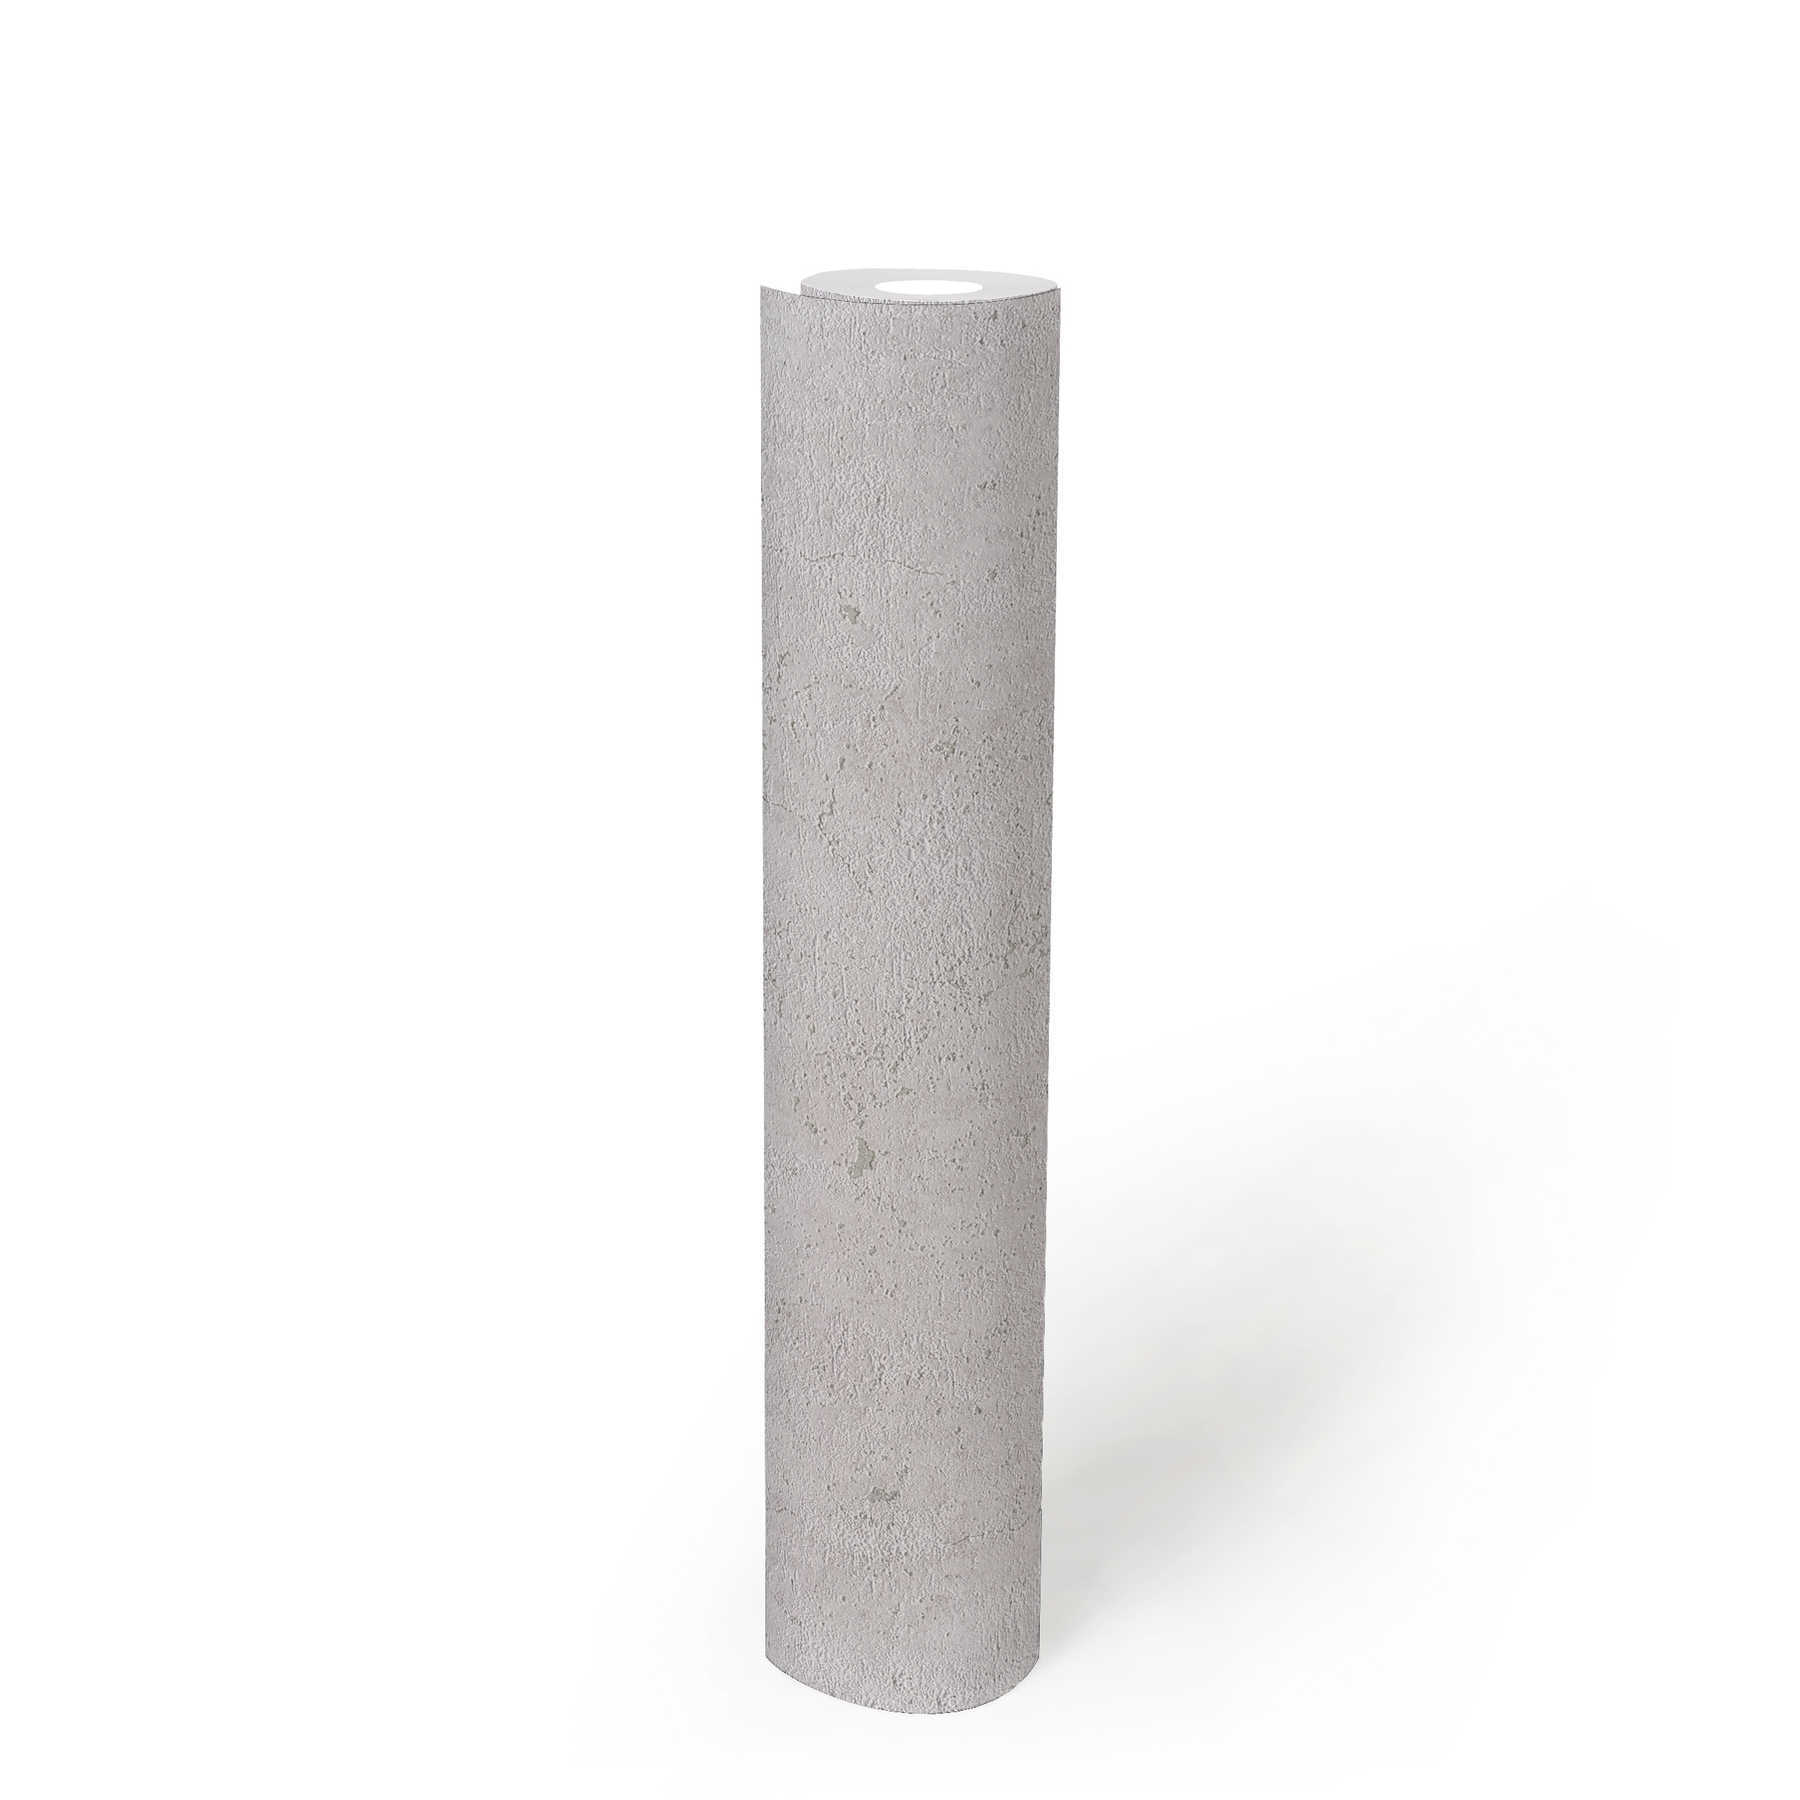             Wallpaper concrete look rustic in industrial style - grey
        